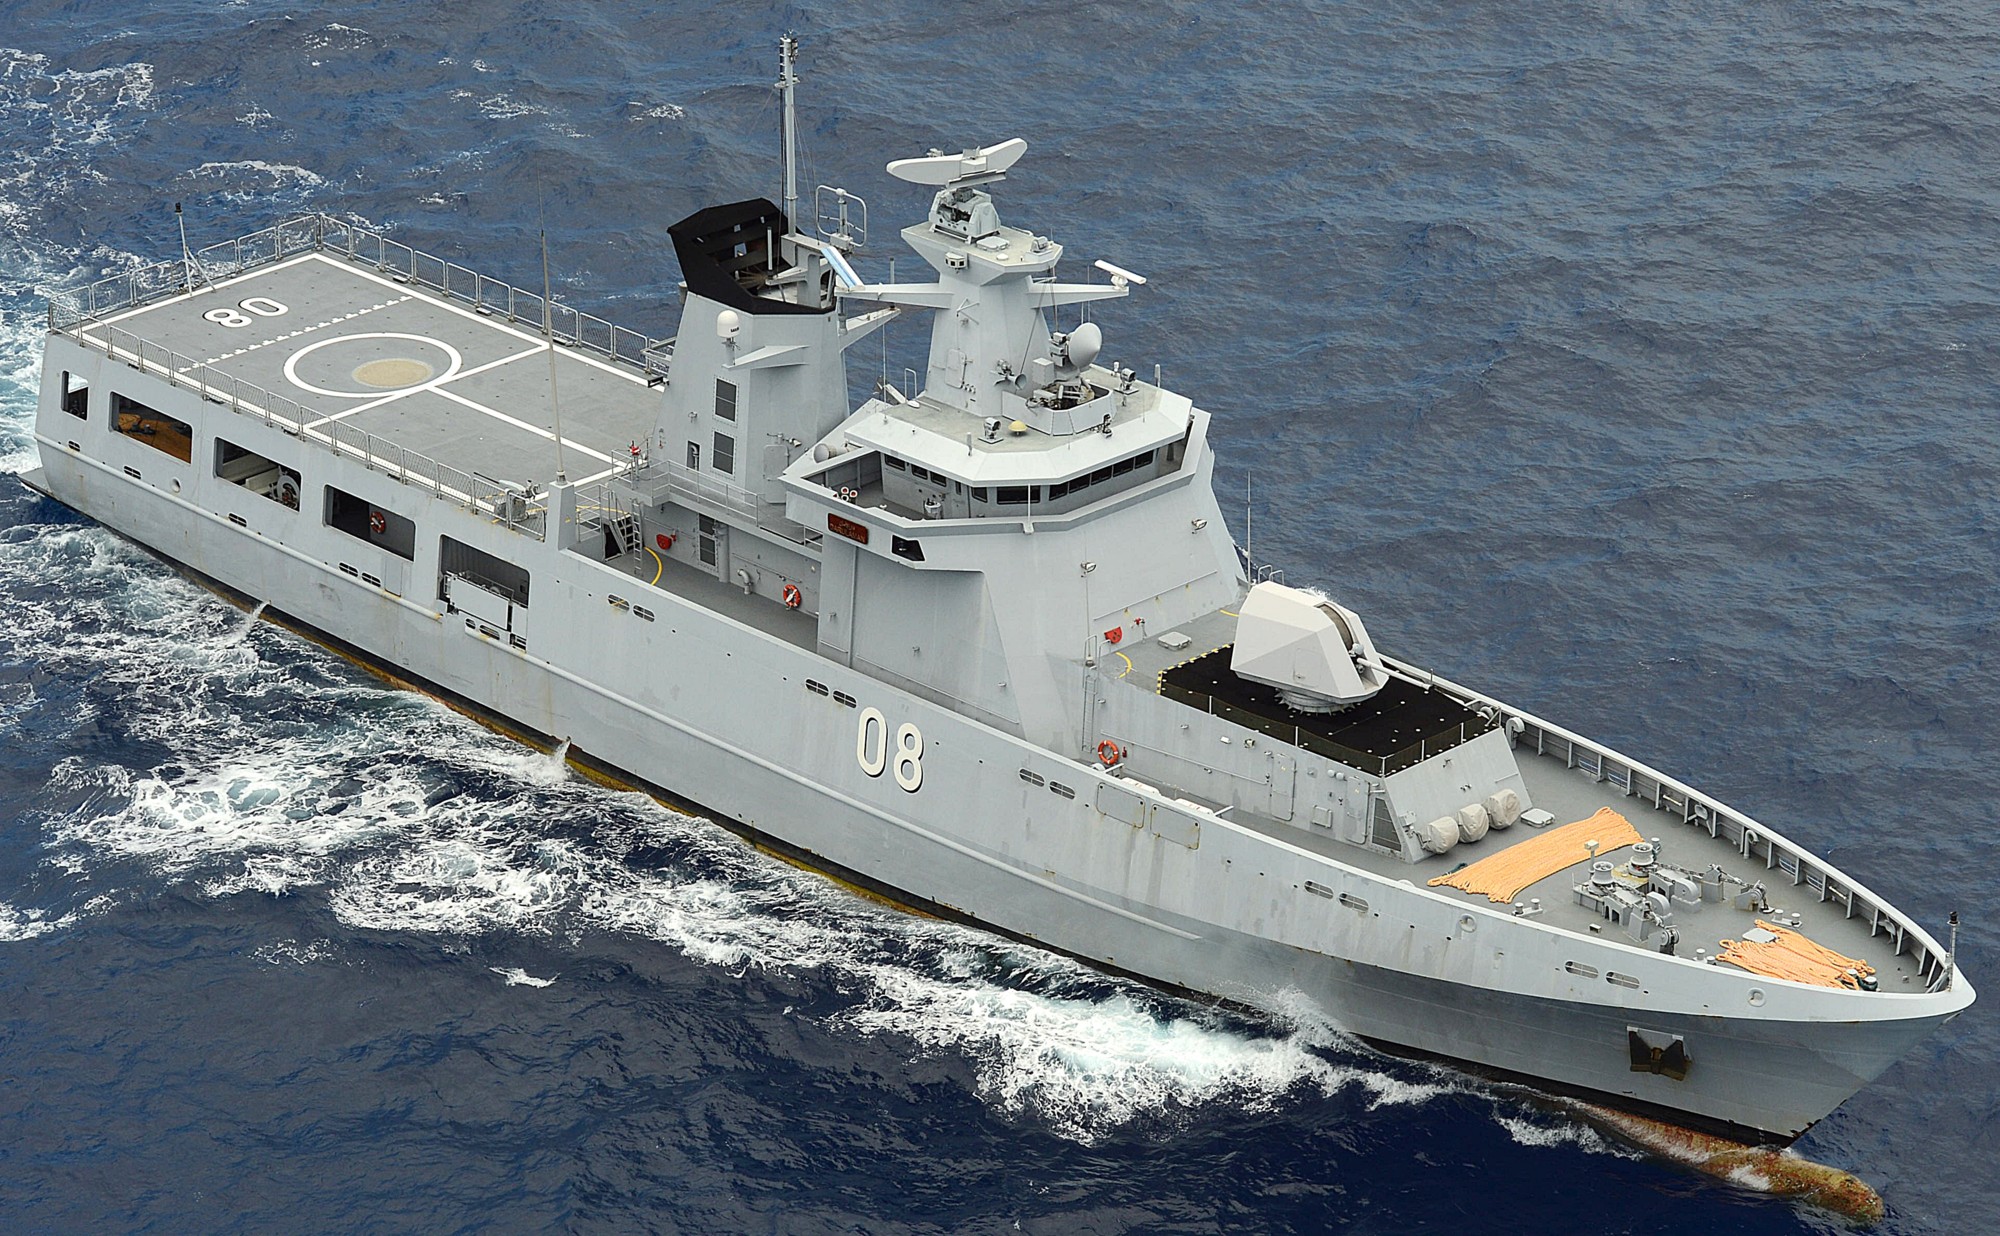 opv 08 kdb darulaman offshore patrol vessel darussalem class royal brunei navy 02